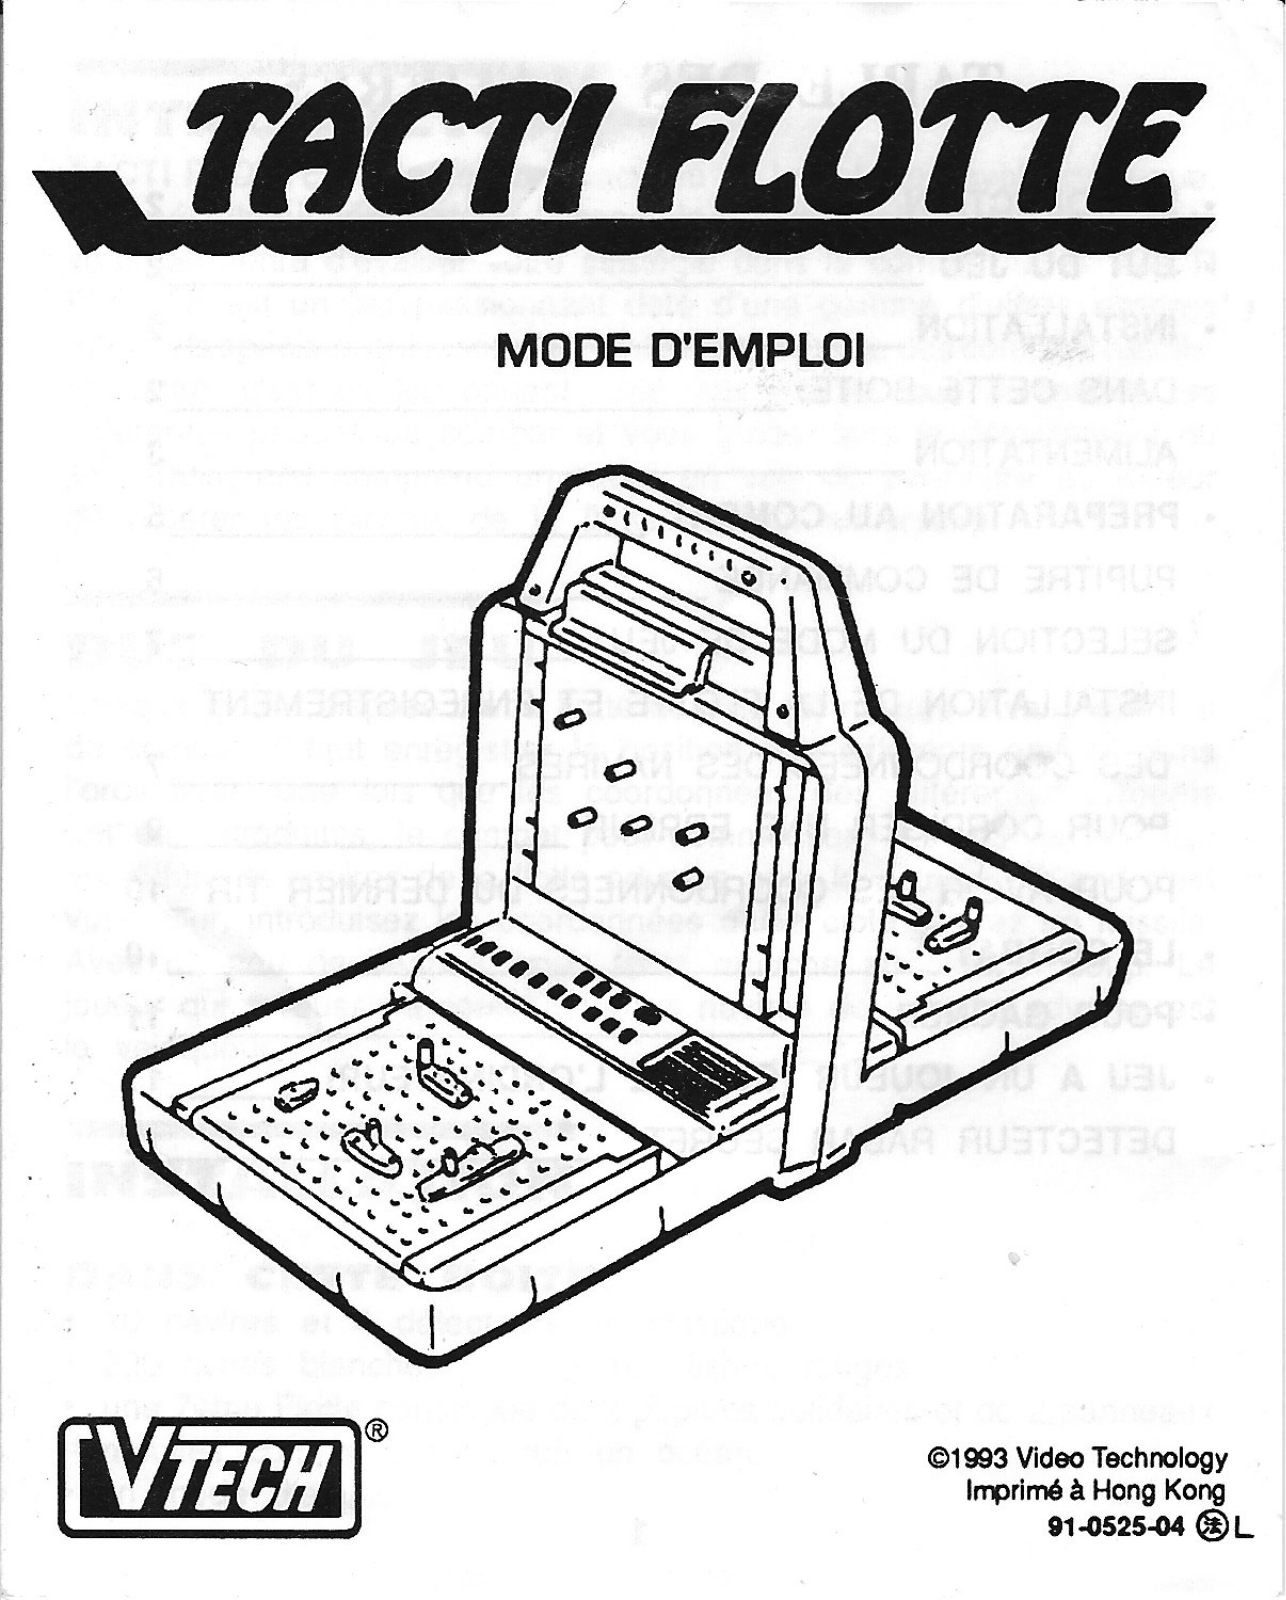 VTech Tacti Flotte User Manual